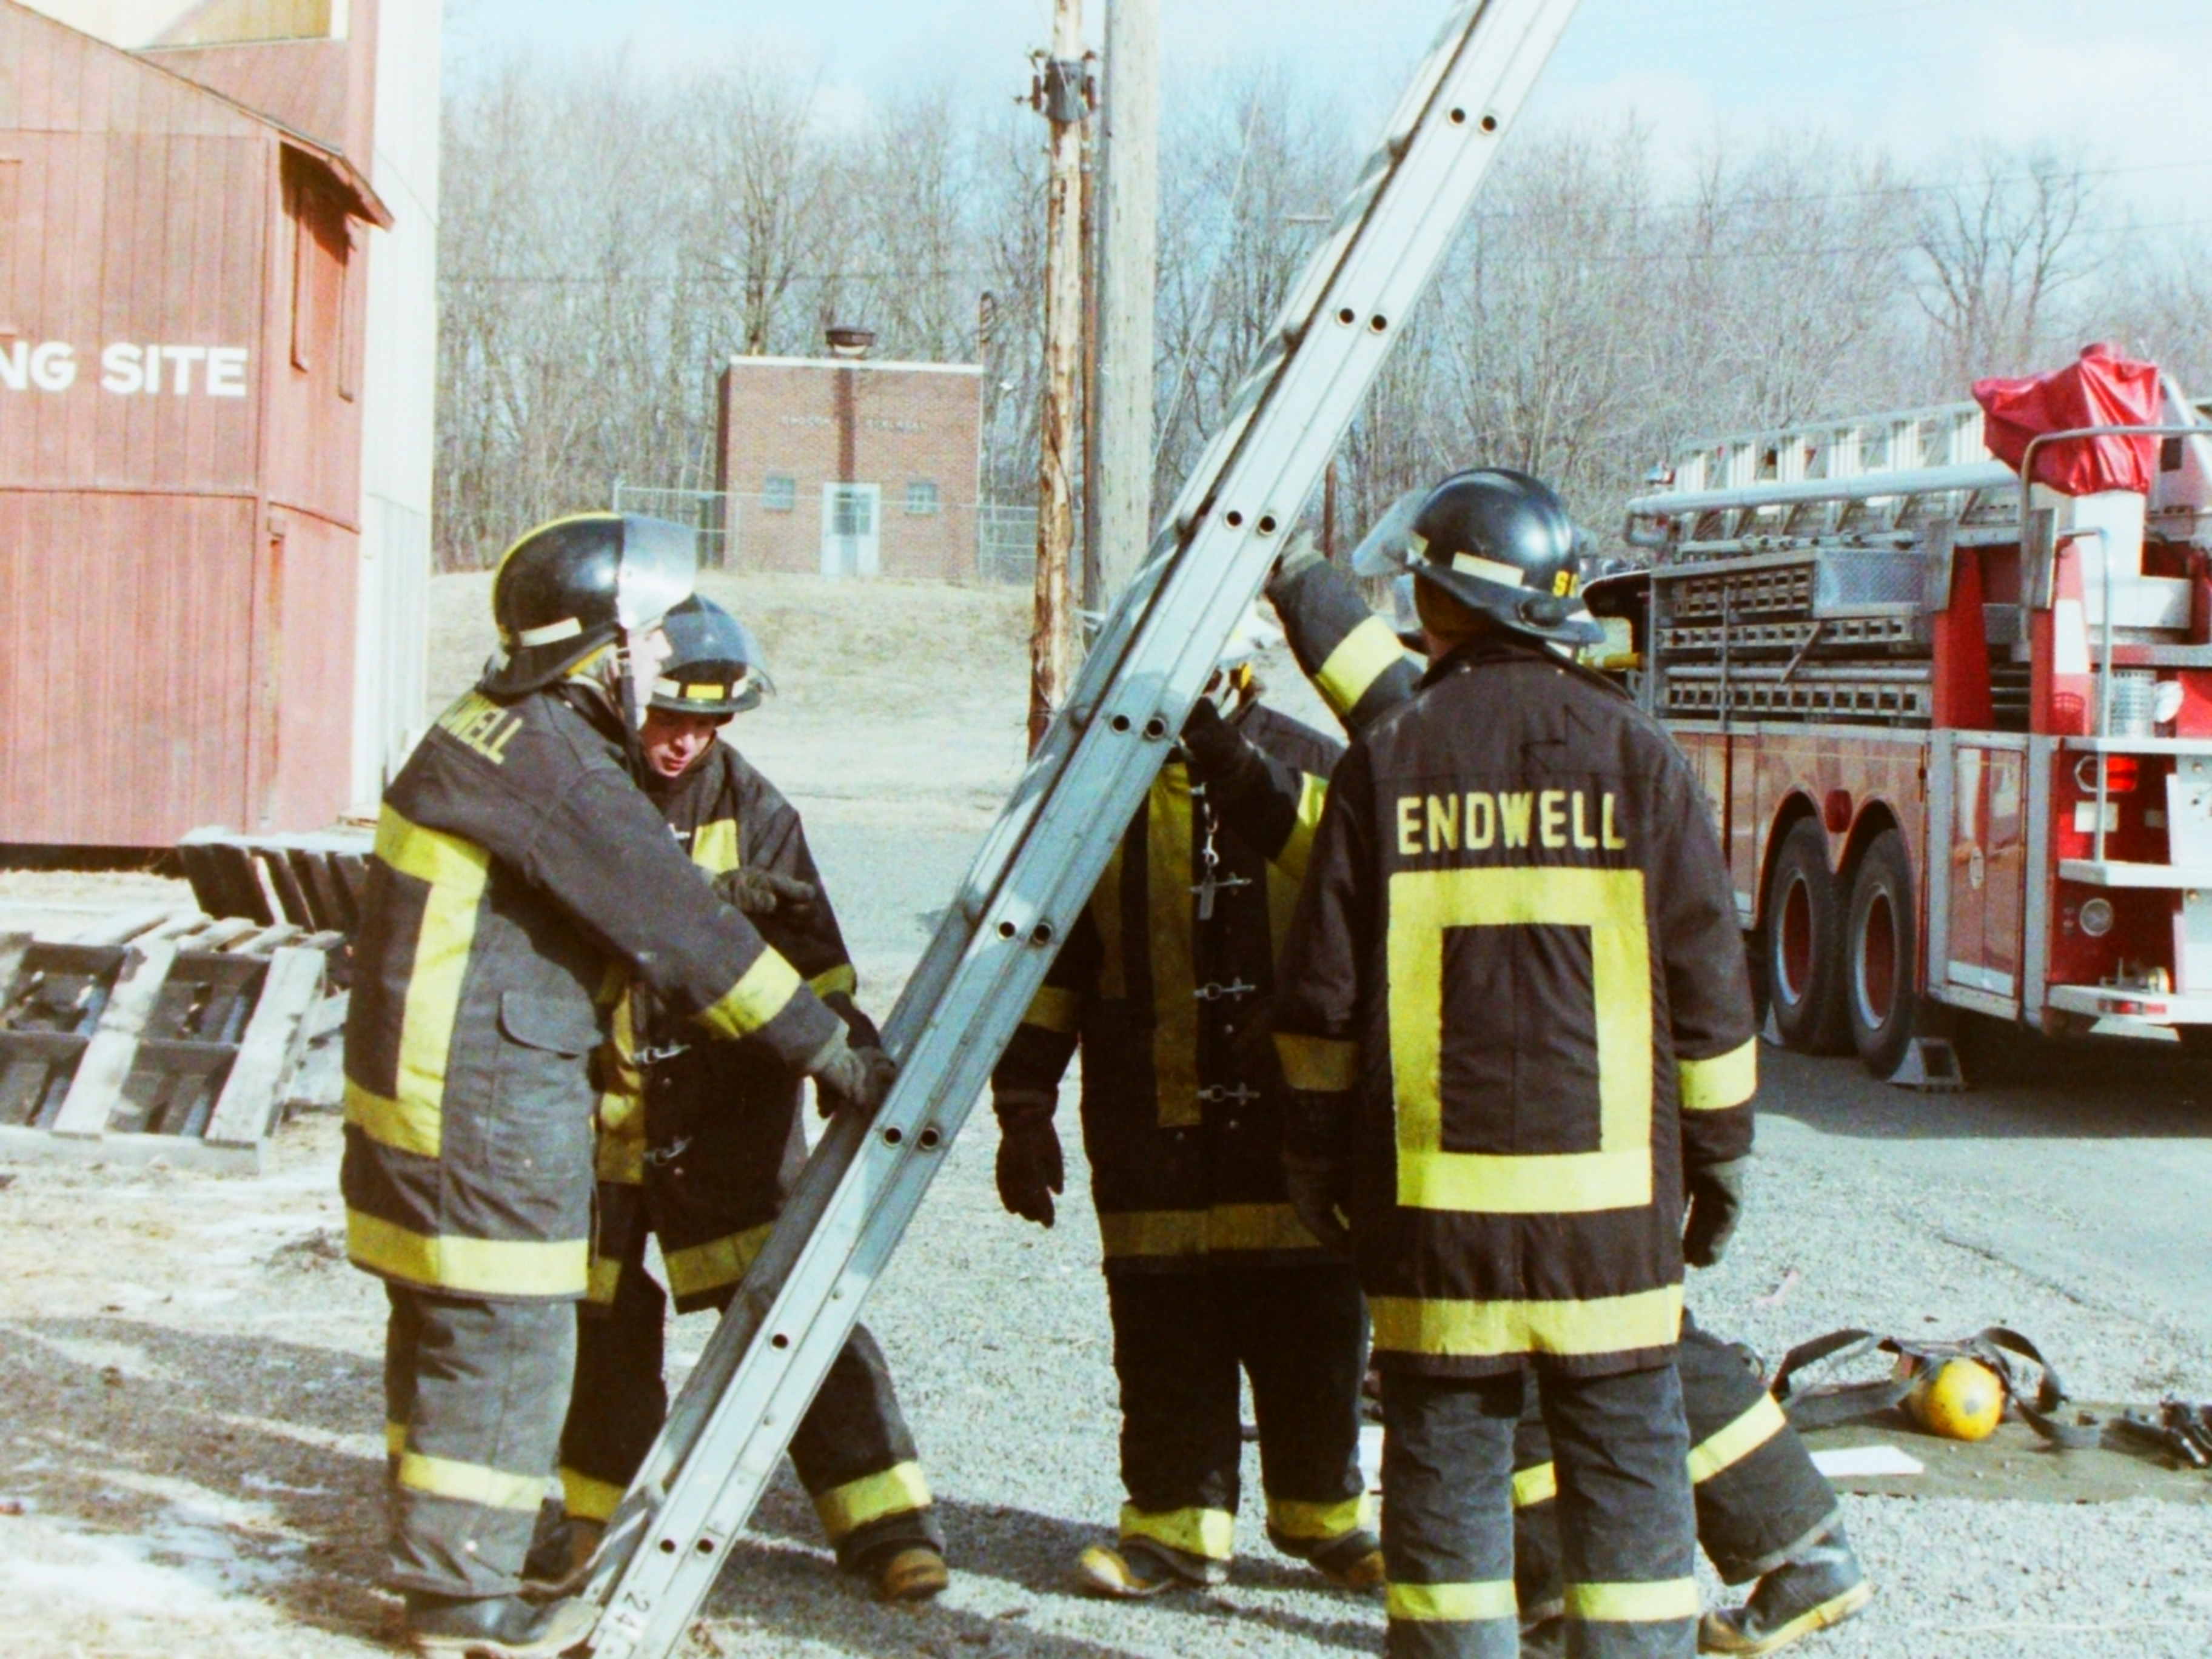 02-18-89  Training - Endwell Training At Vestal